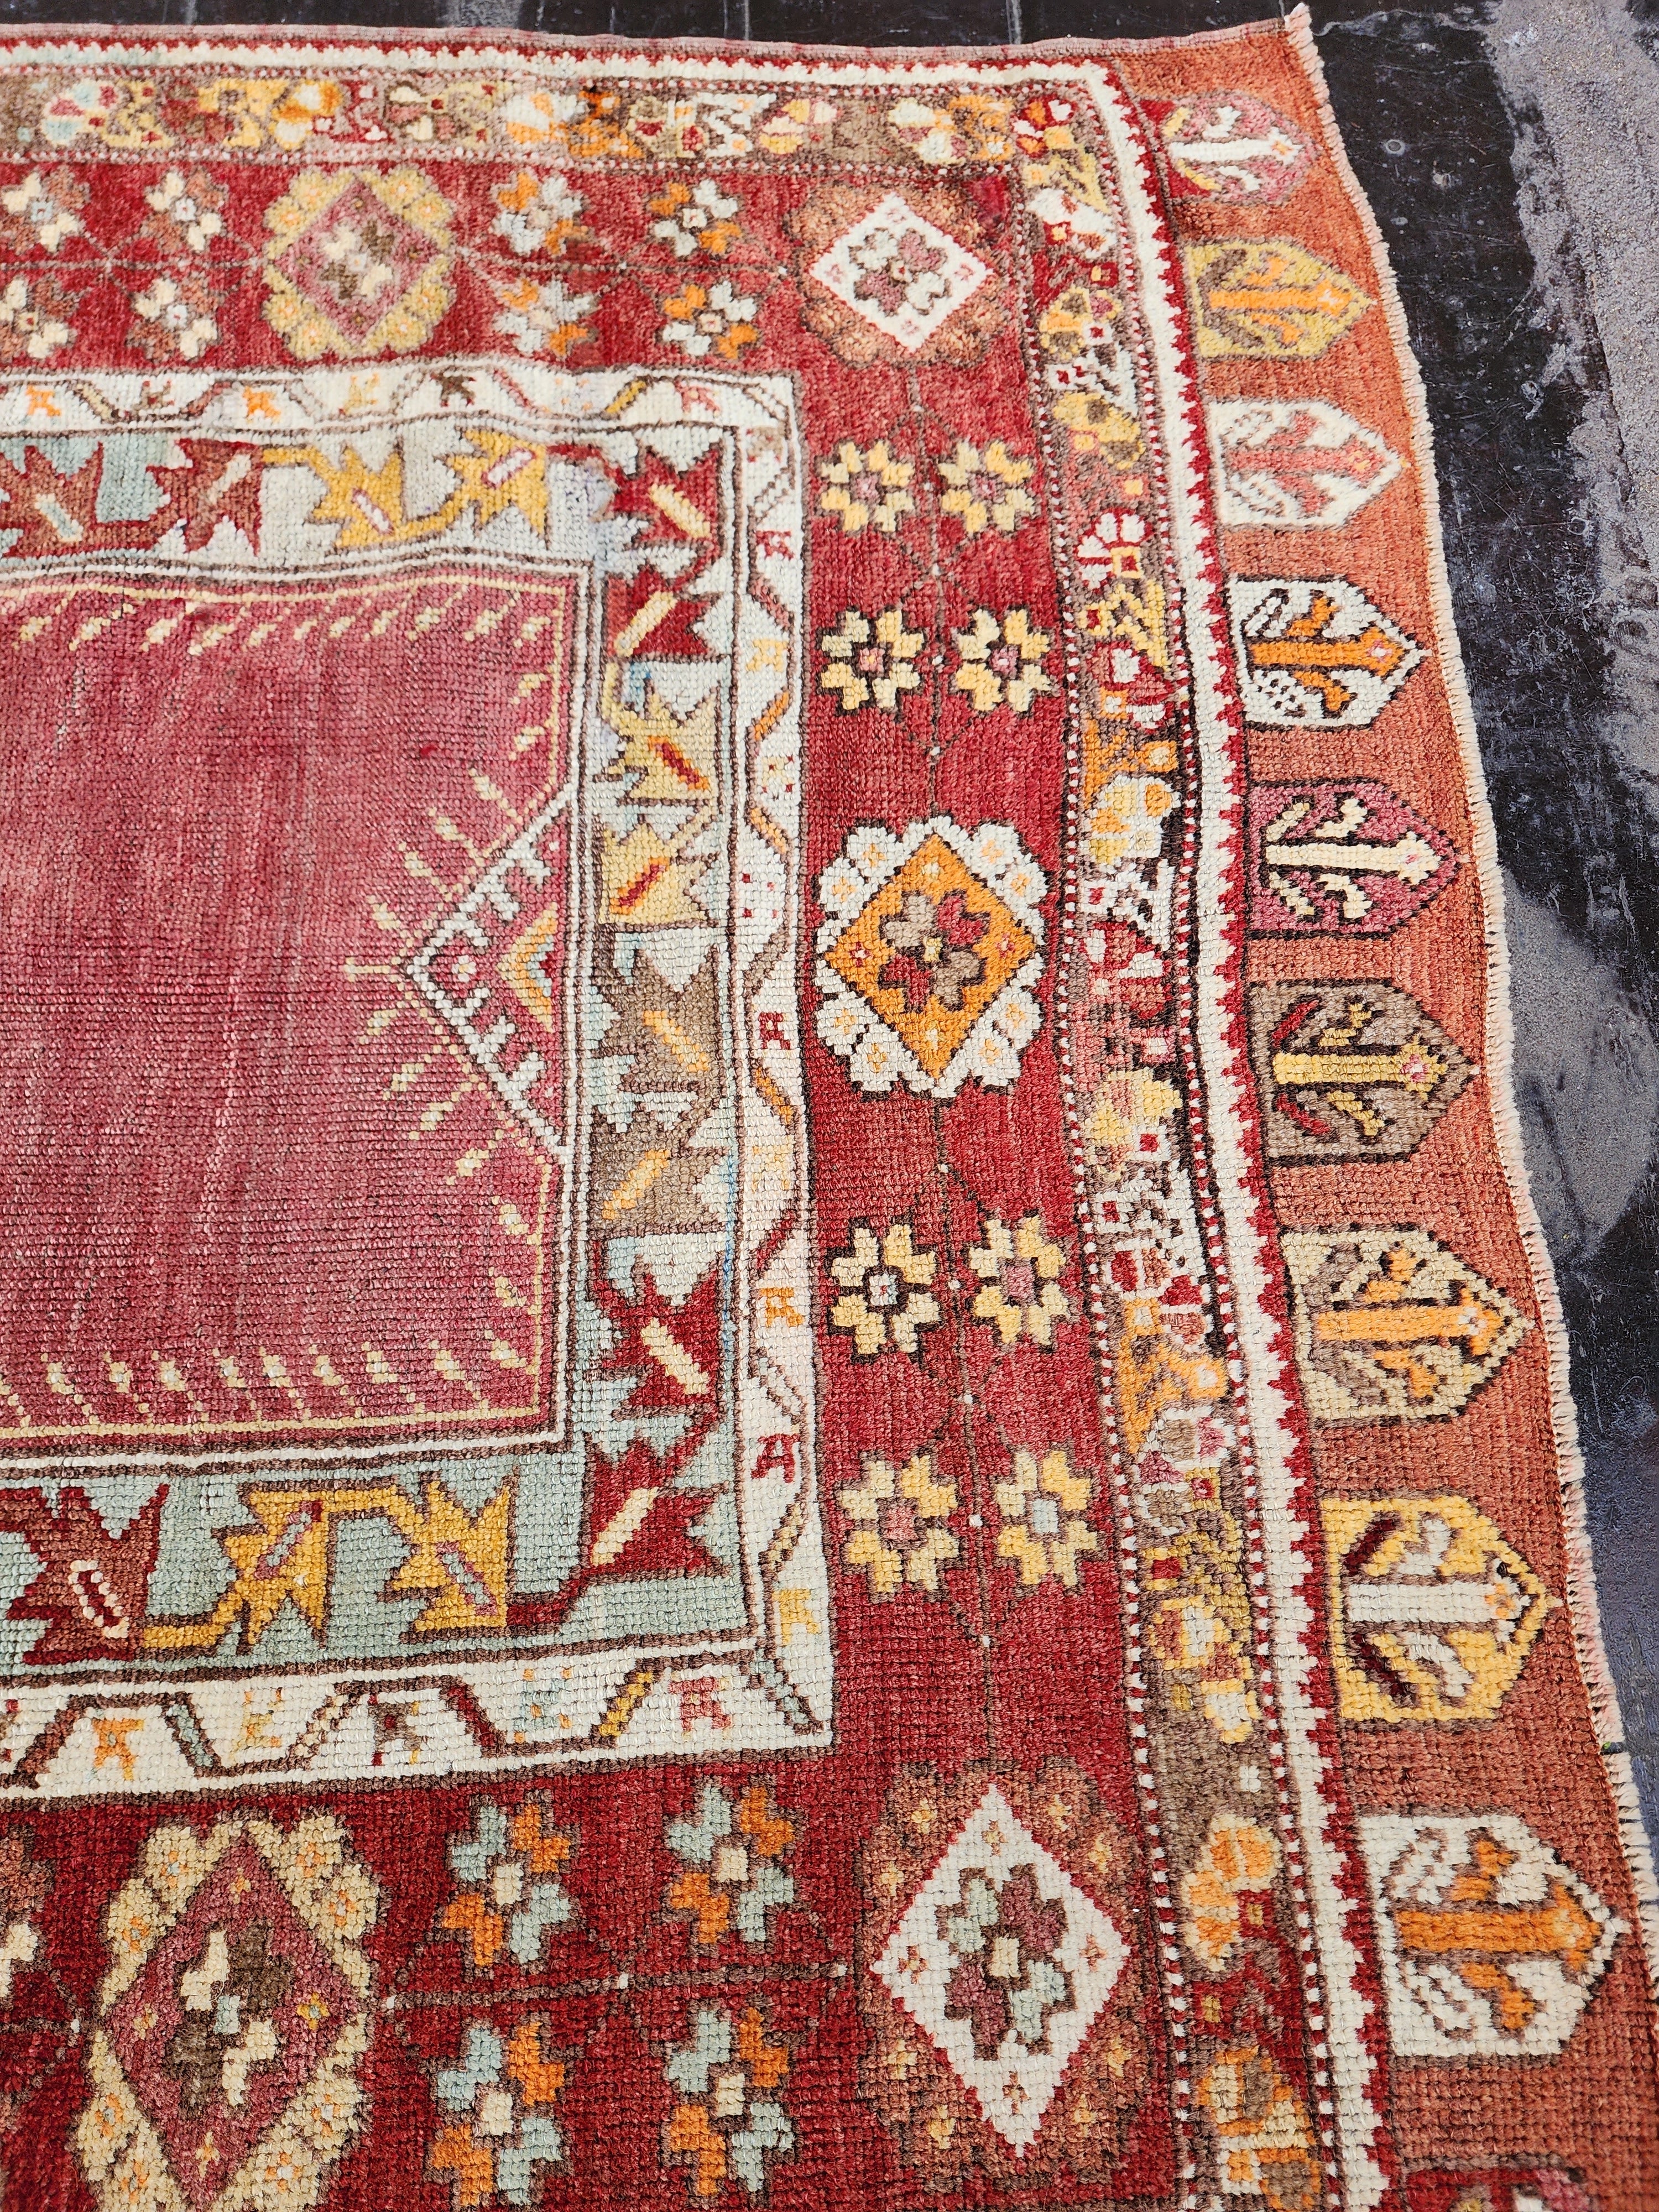 Antique Konya Turkish Rug, Vintage Prayer Rug, Bohemian Tribal Nomadic Rustic Rug, Handmade Wool Rug, Moroccan Style Persian Area Rug, 5’7”x3’5”